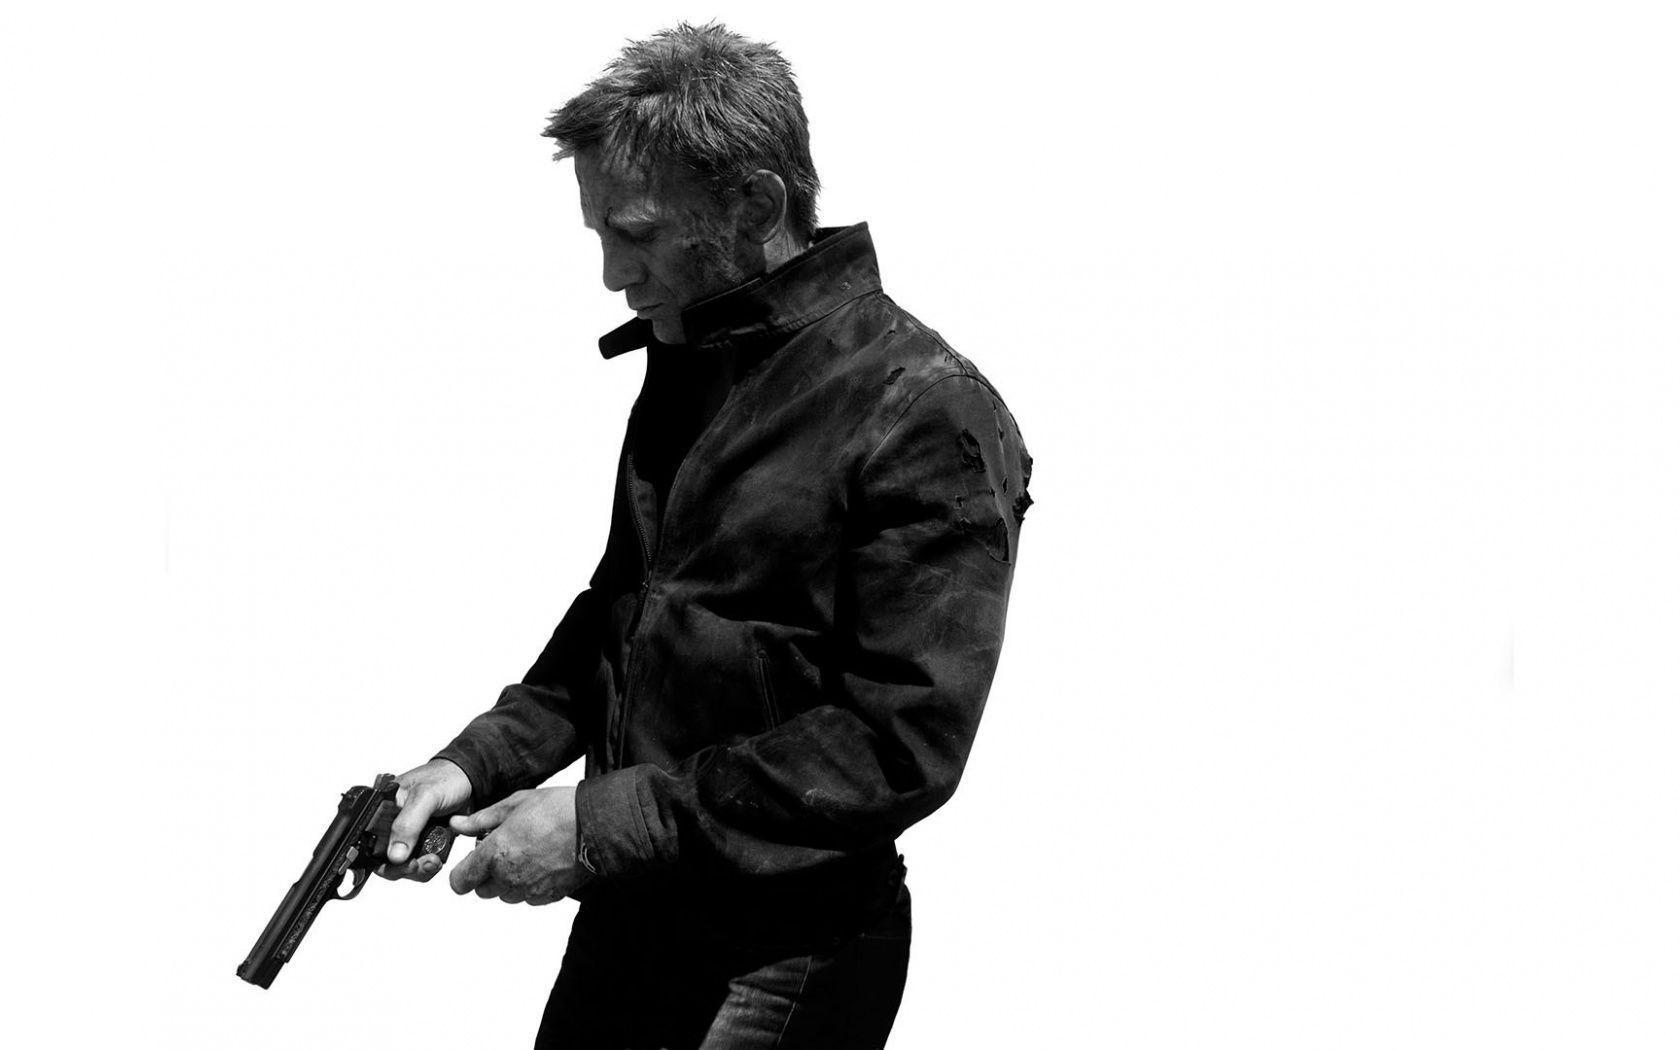 Top, New 58 Daniel Craig as 007 wallpaper (Free HD Download)